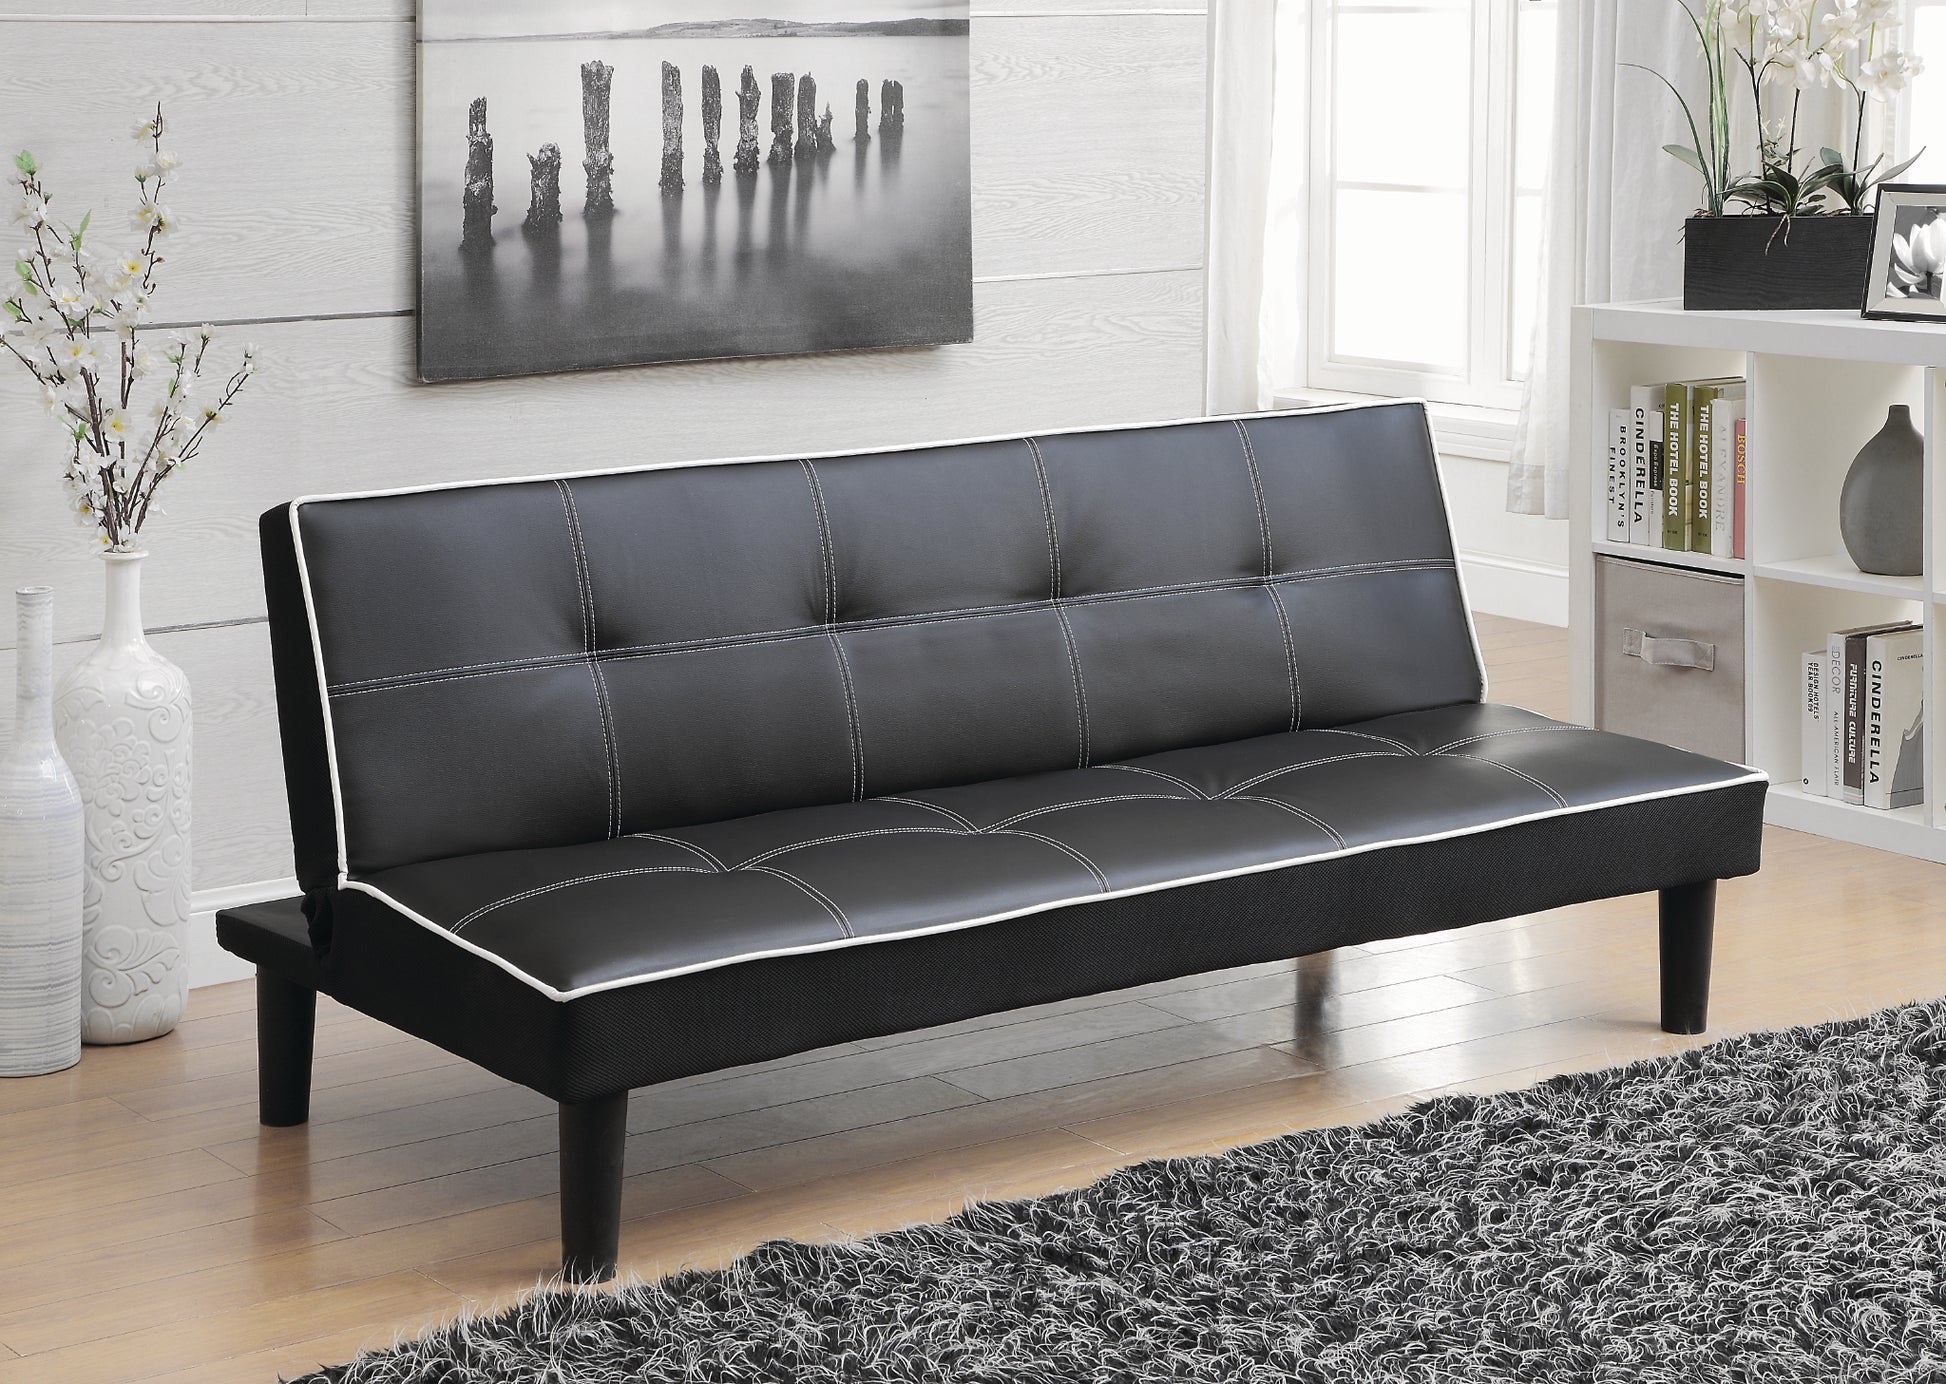 SB1280 - Sofa Bed Black / White